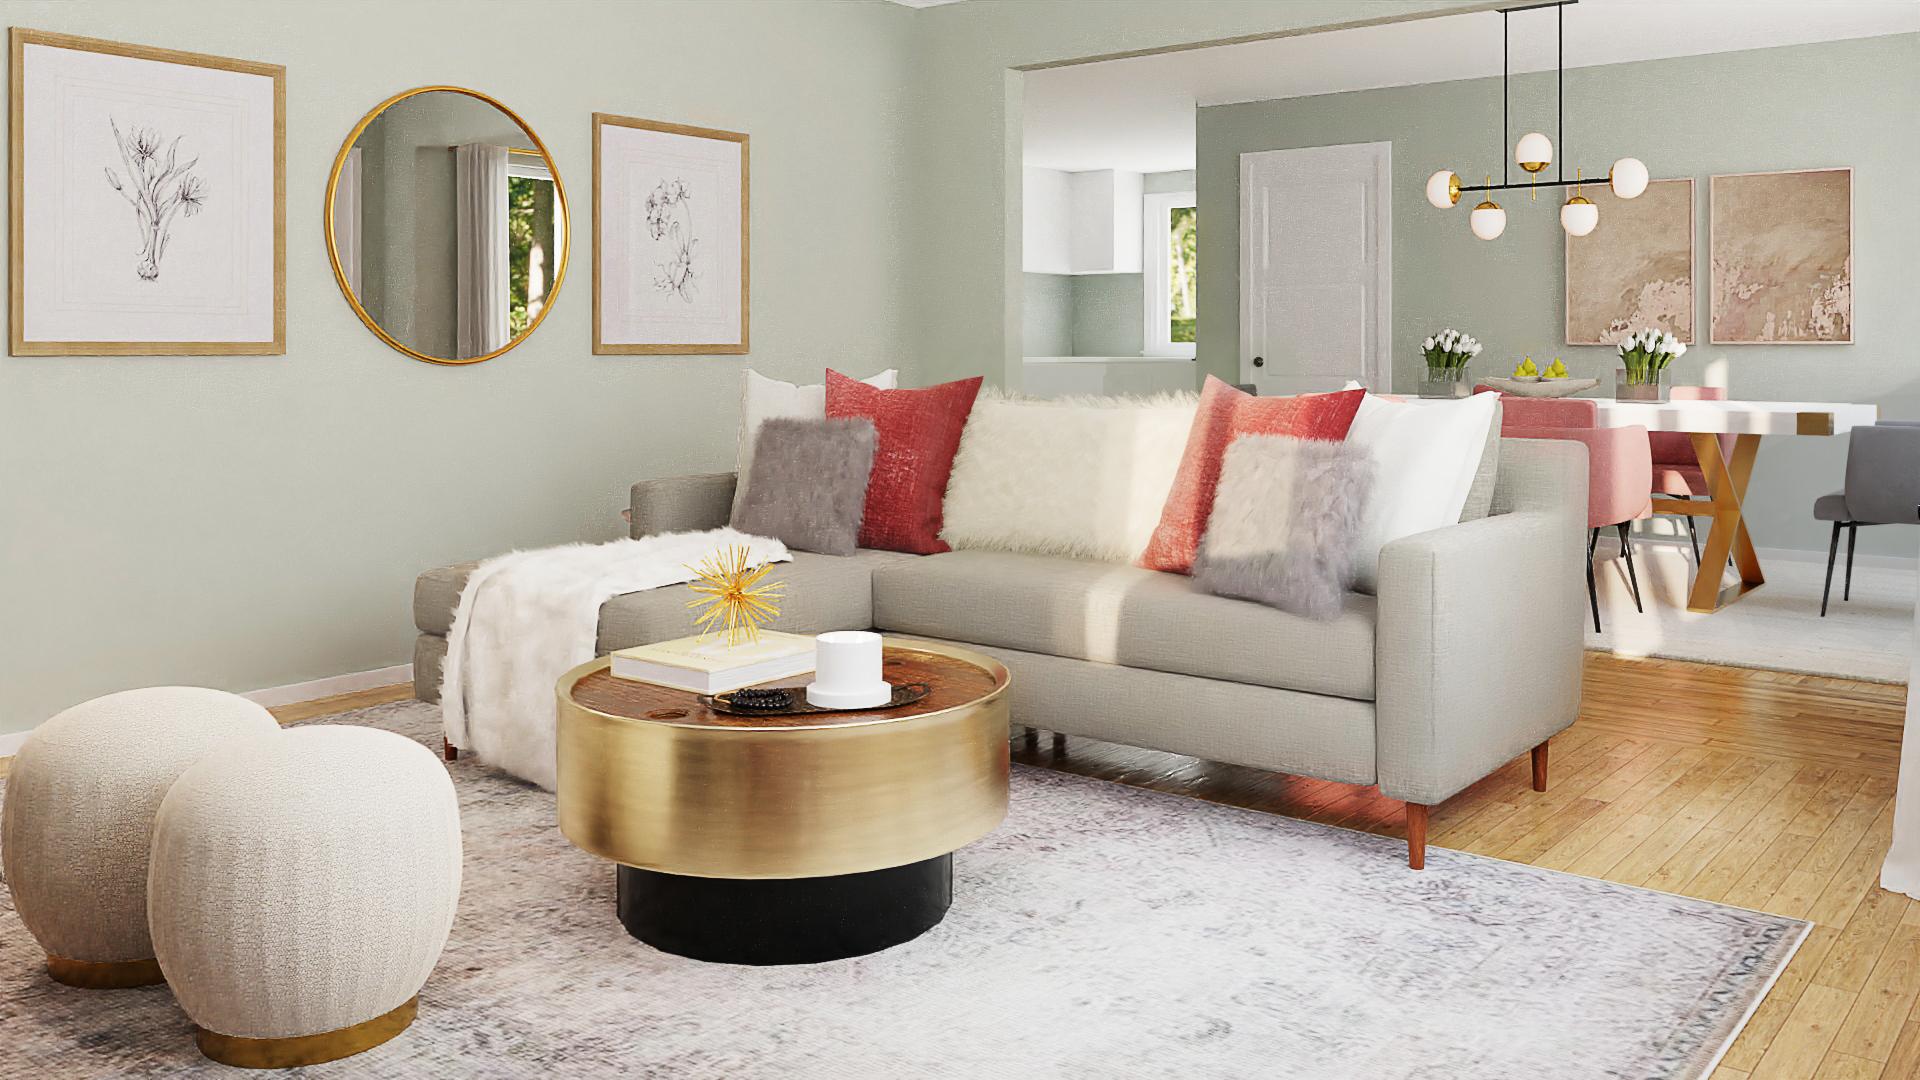 Pretty Pinks Make This Modern Living Room Scream Glamorous